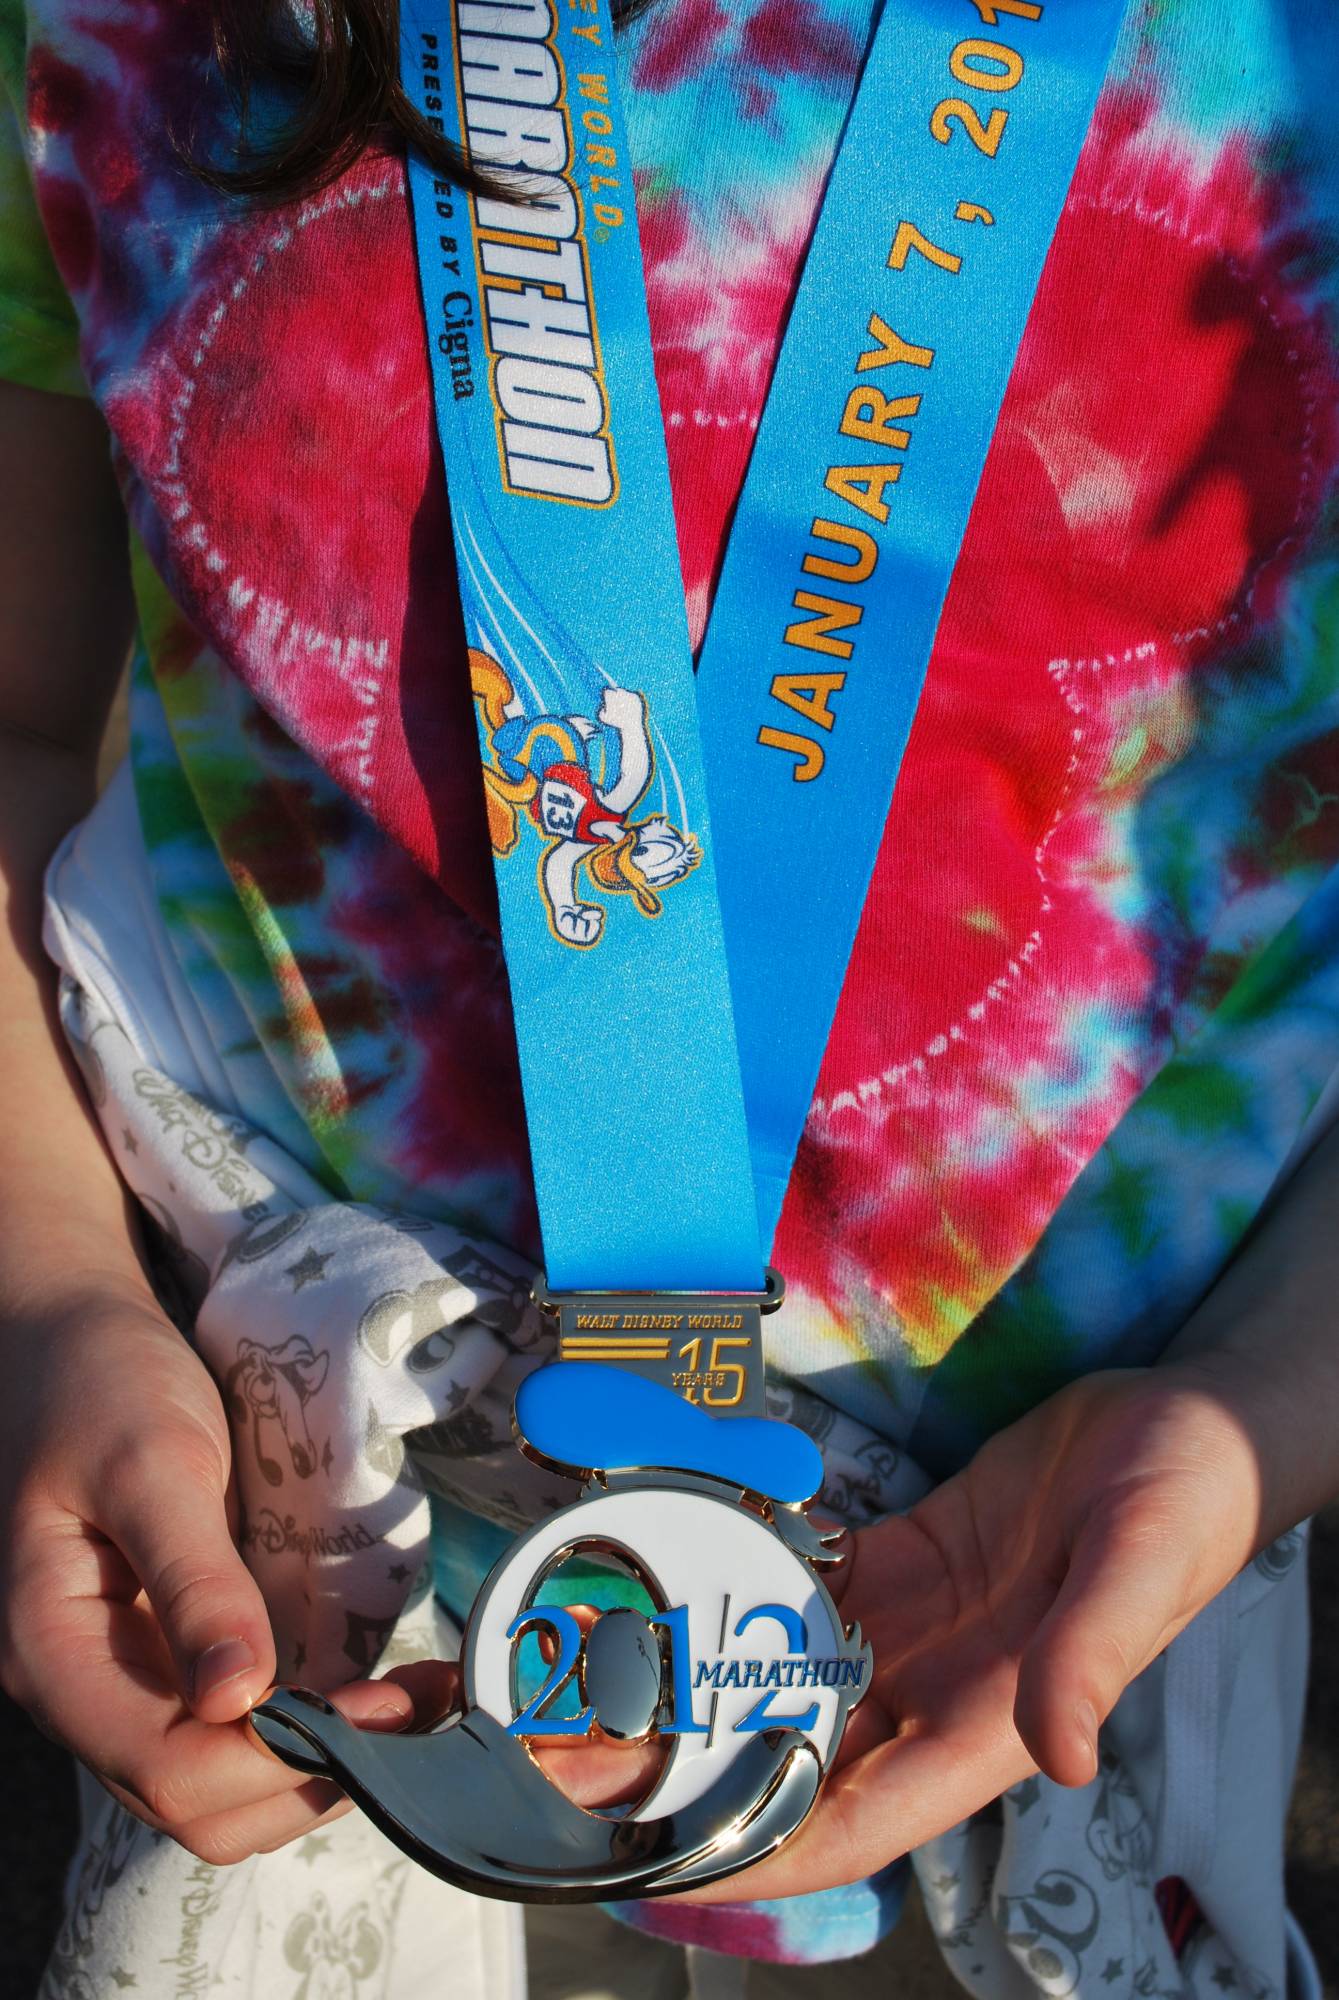 2012 Half Marathon Medal